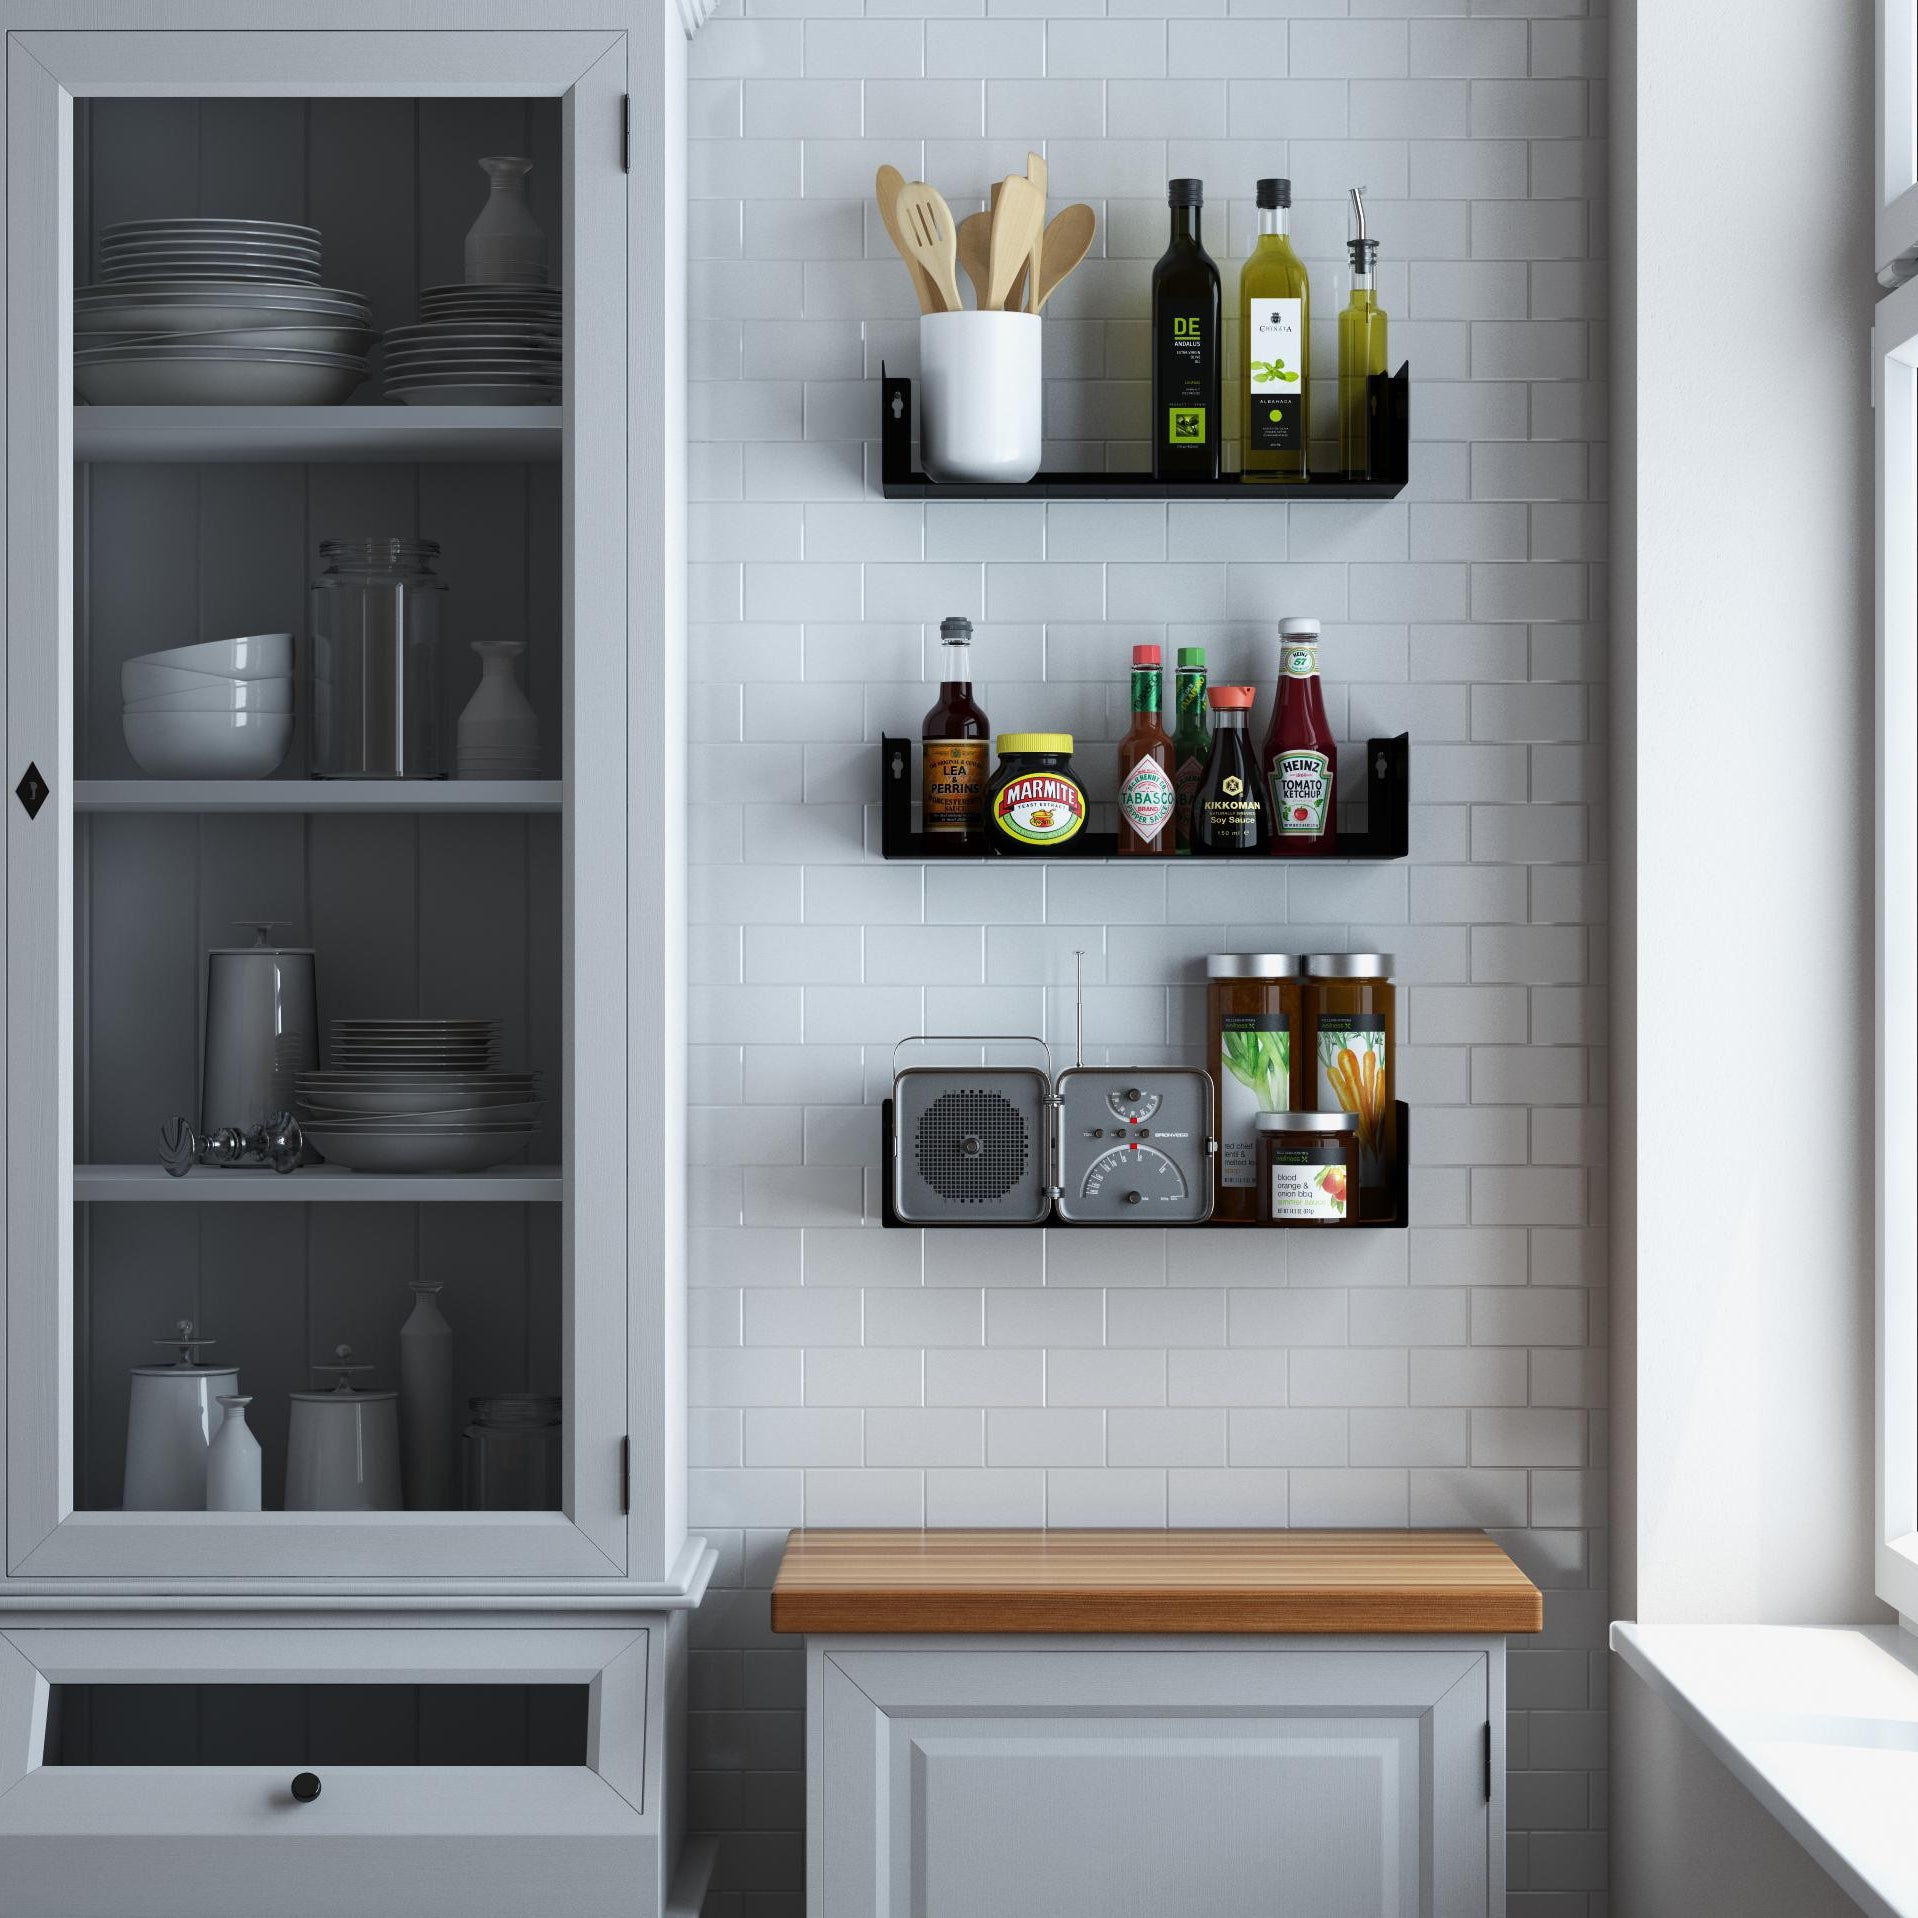 BALI U Shape Kitchen Shelves and Wall Mount Spice Rack – 17" Length – Black - Wallniture